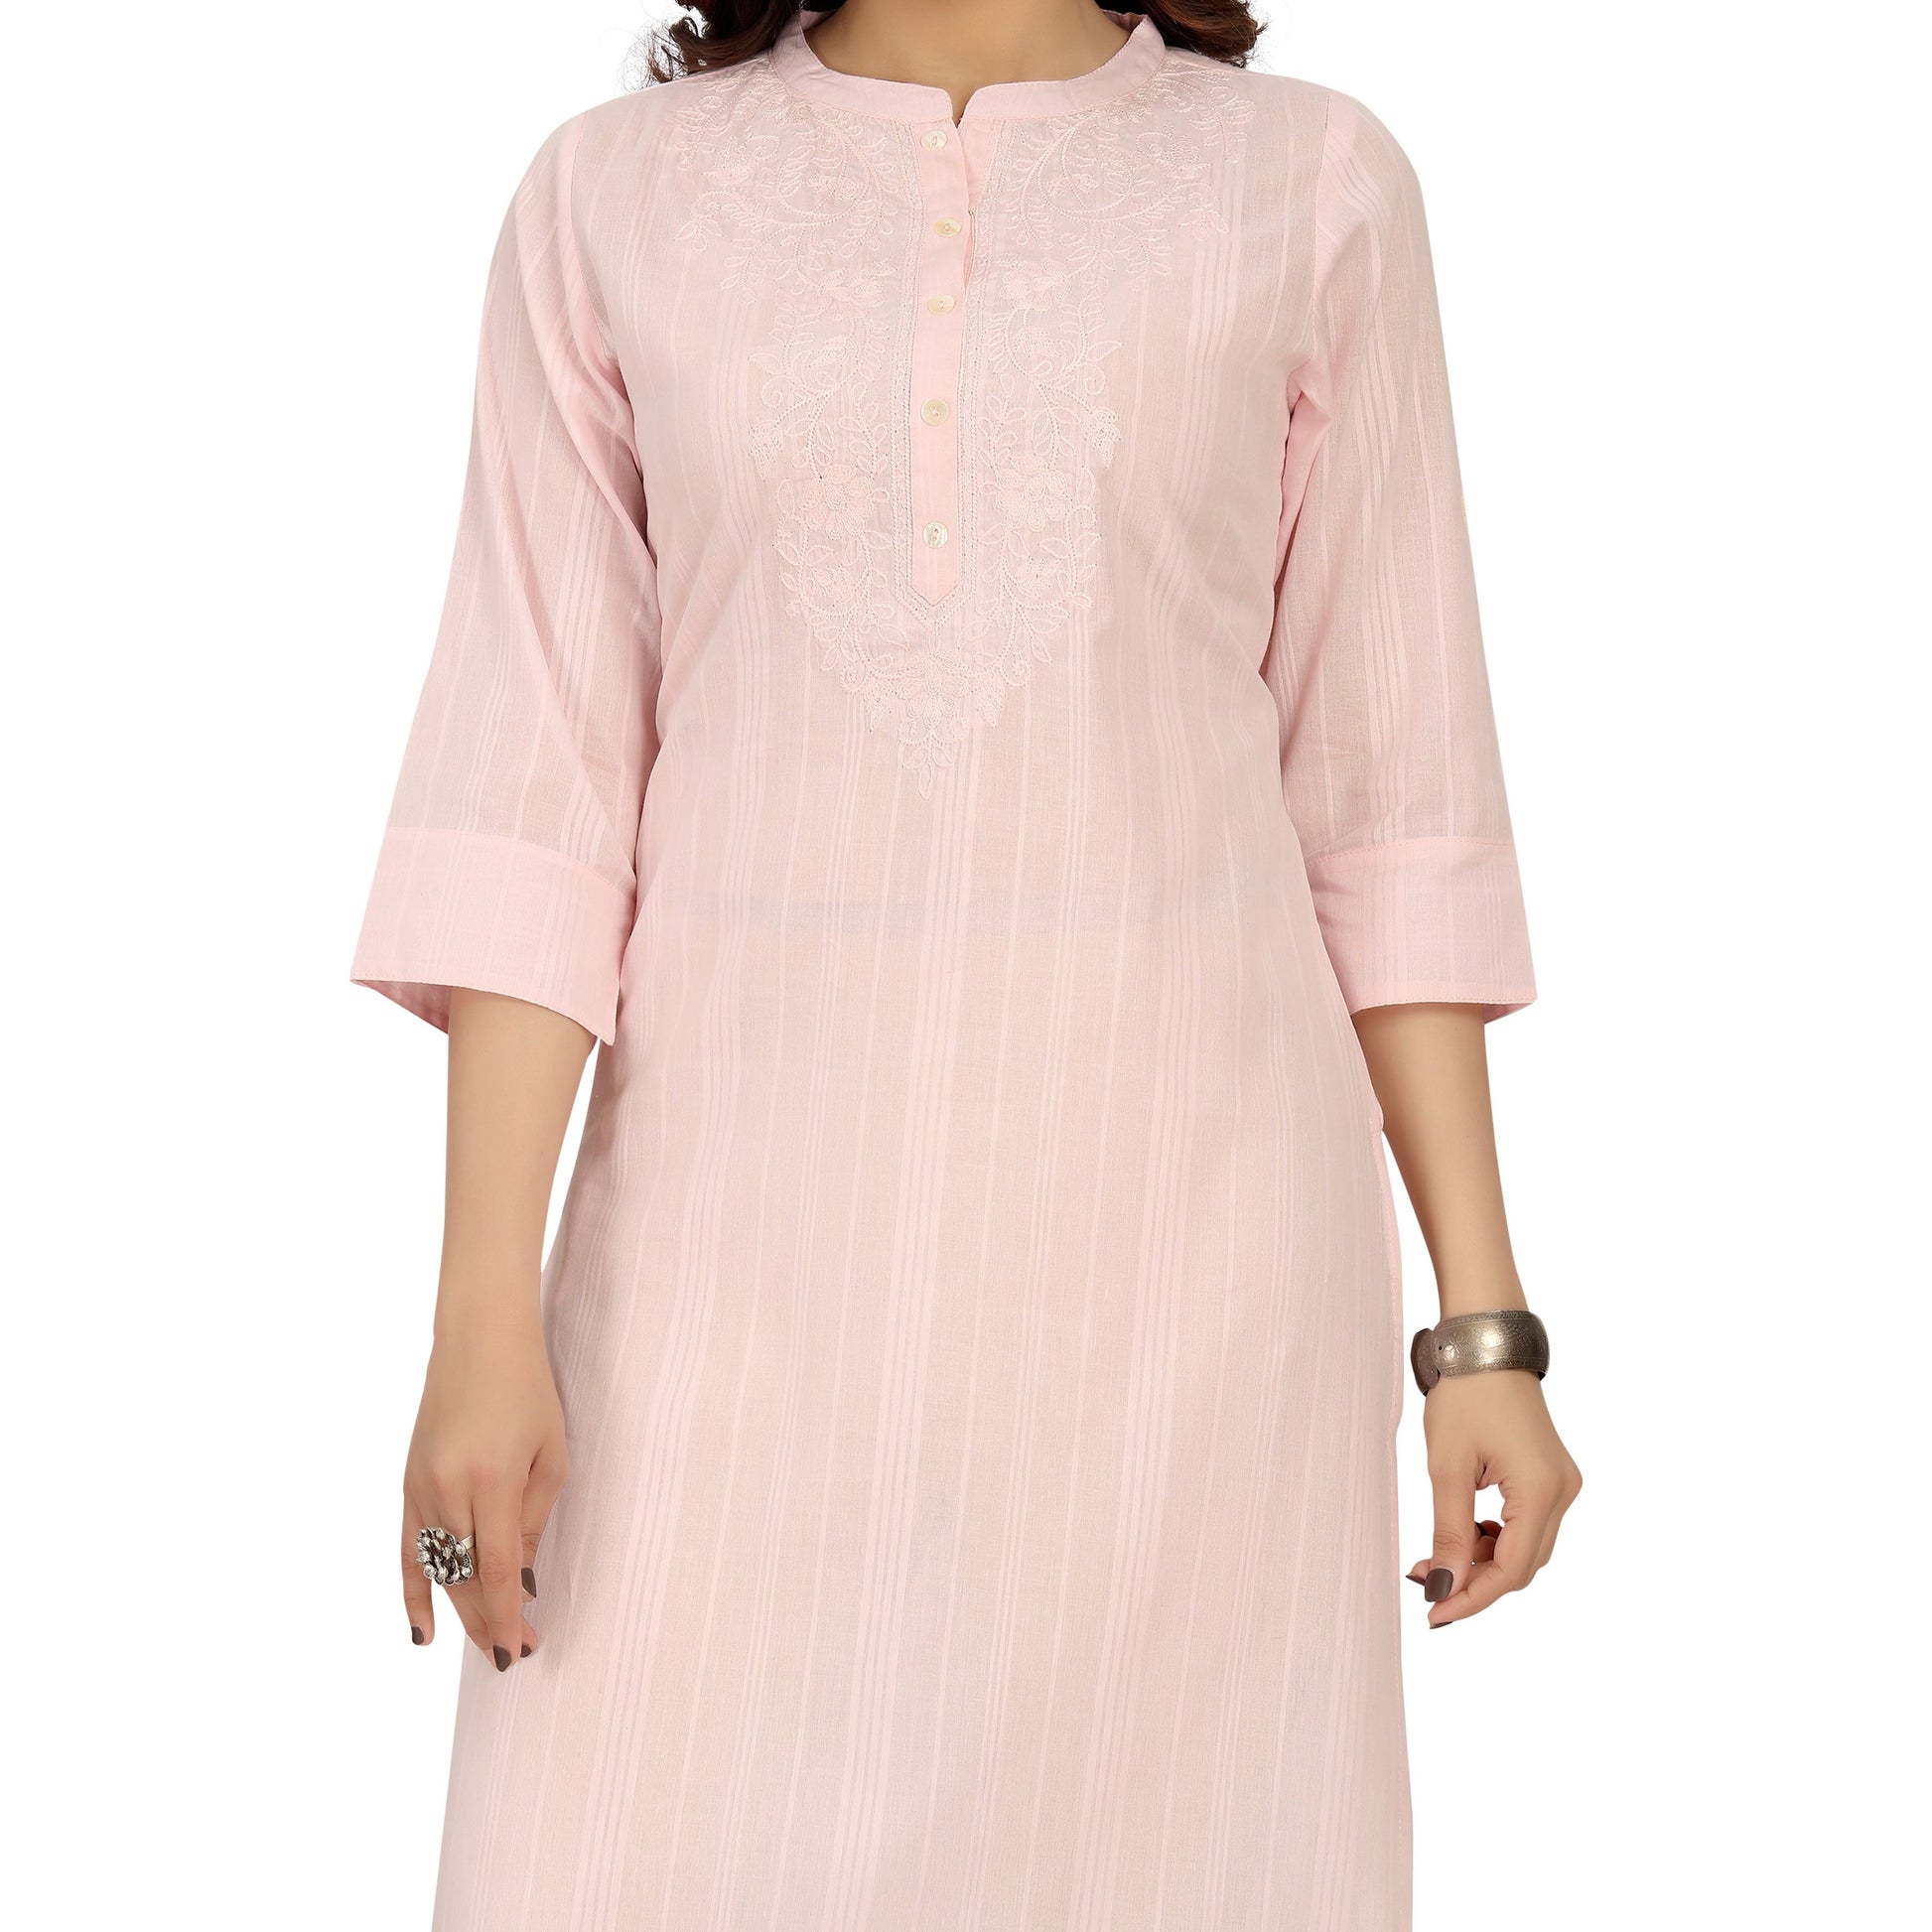 Cotton kurtas for women, indian kurti for everyday wear, women kurtas baby pink